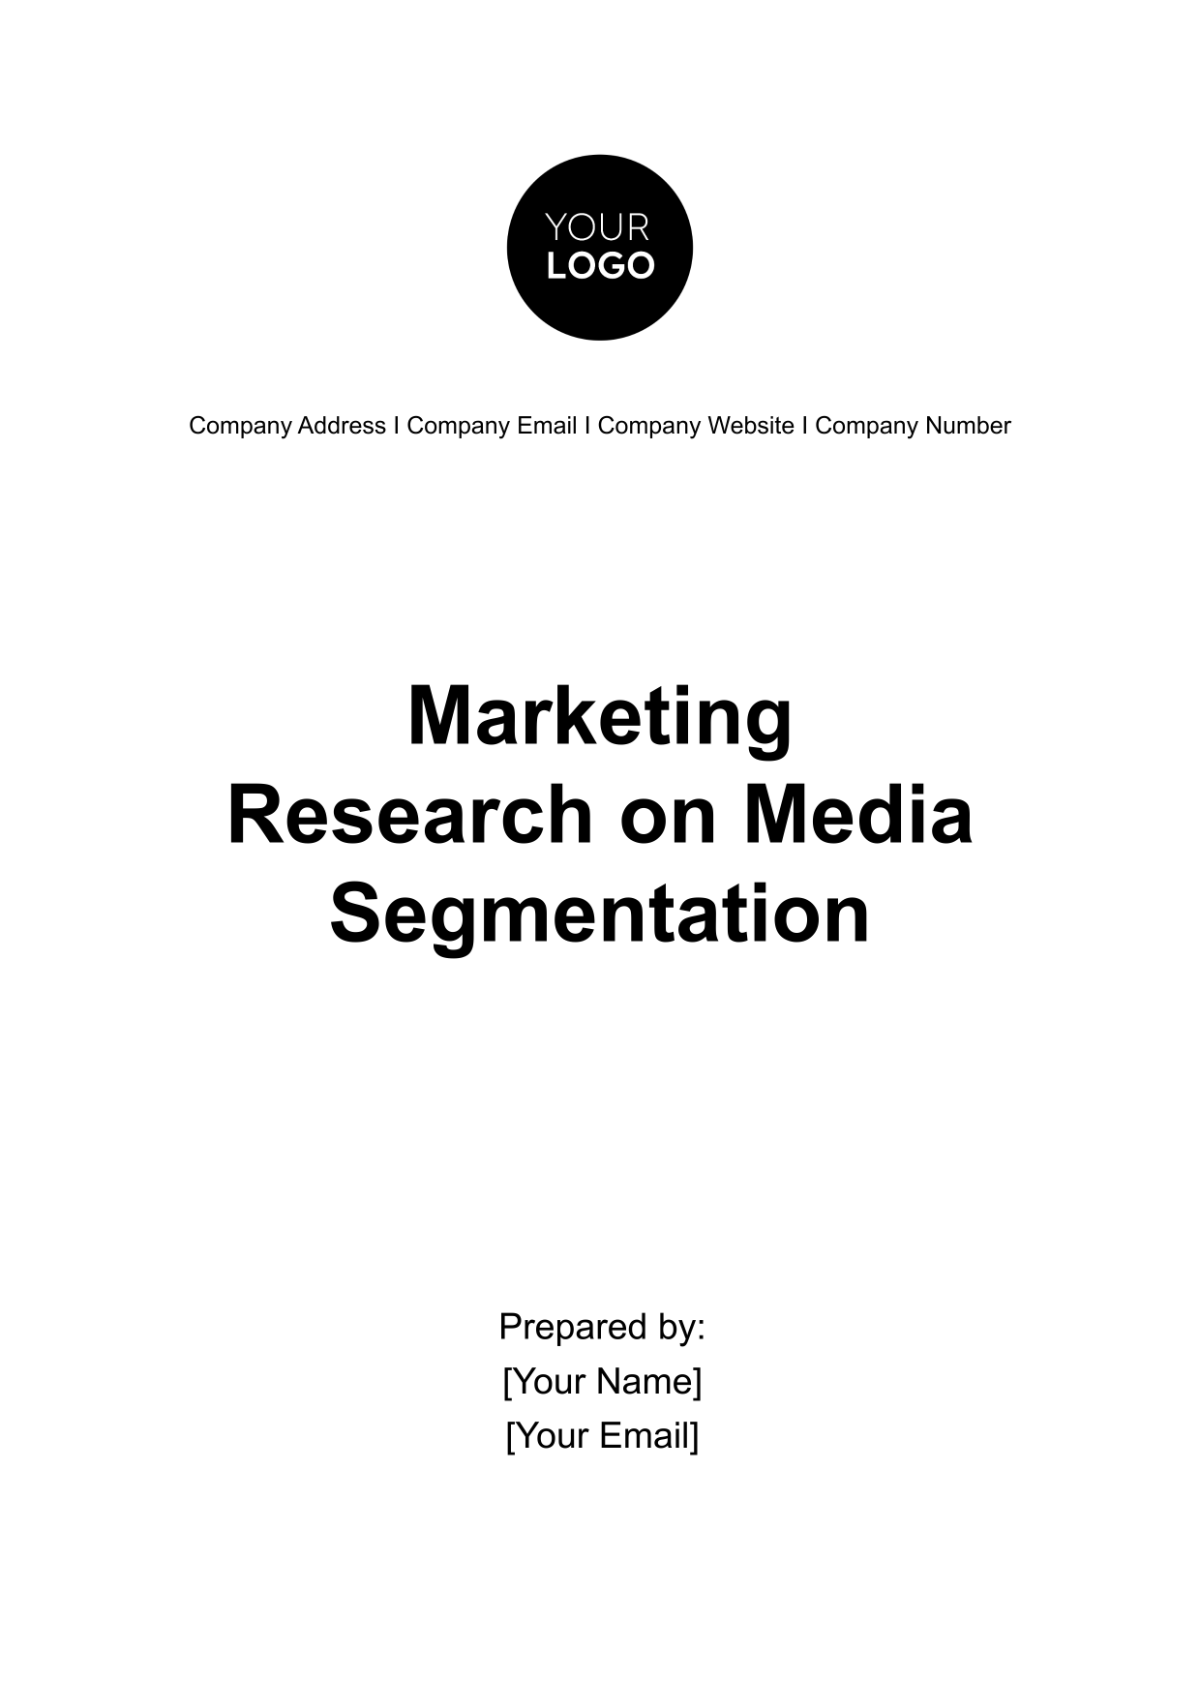 Free Marketing Research on Media Segmentation Template